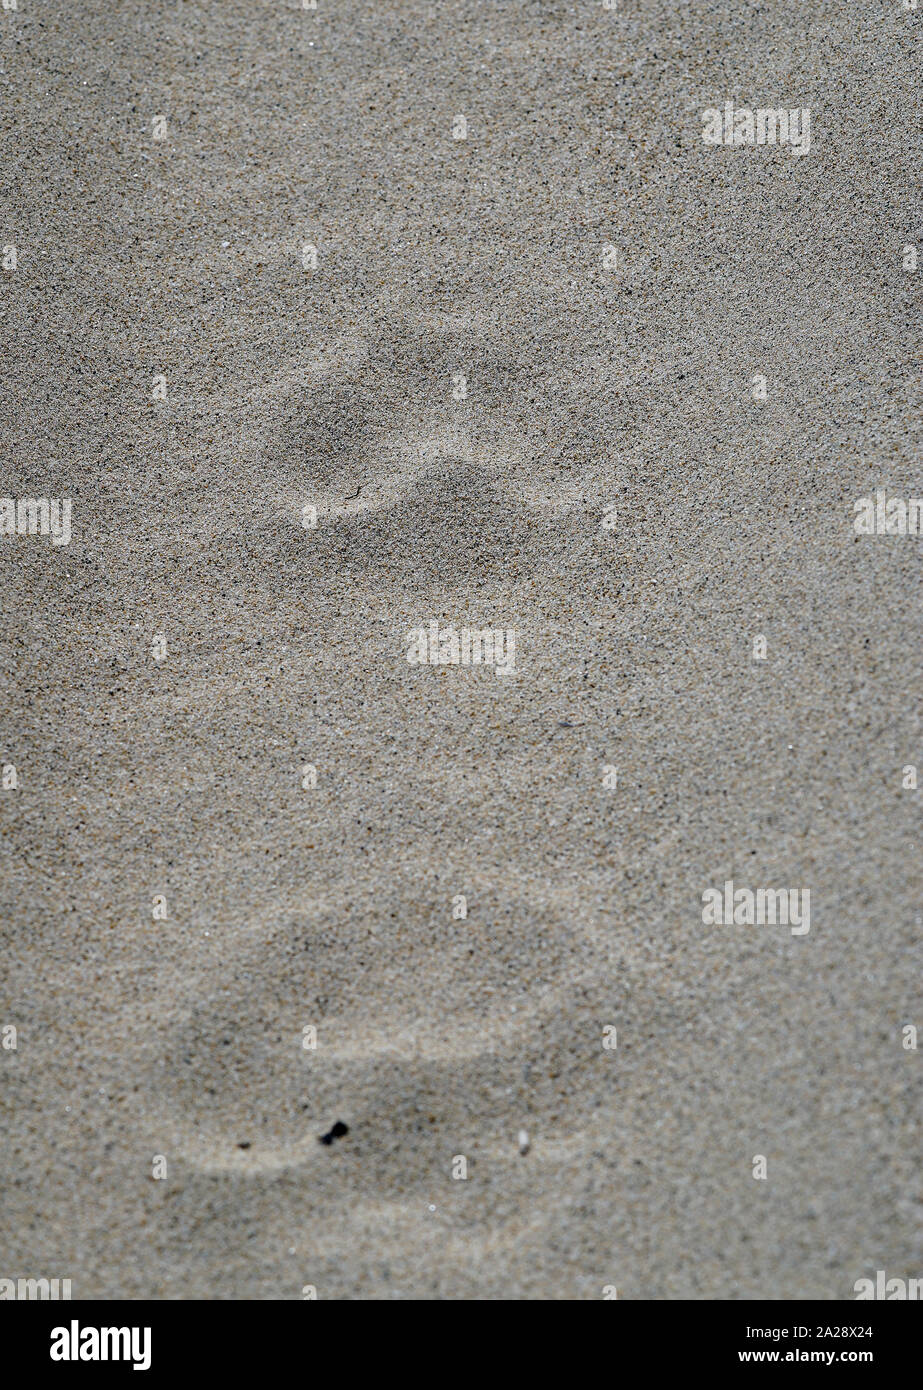 Spuren von Amur o Sibirische Tiger, Phantera tigris altaica, am Strand (Wild). Lazovsky Nature Reserve, sikhote-alin Primorski Krai. Russland, Asien Stockfoto